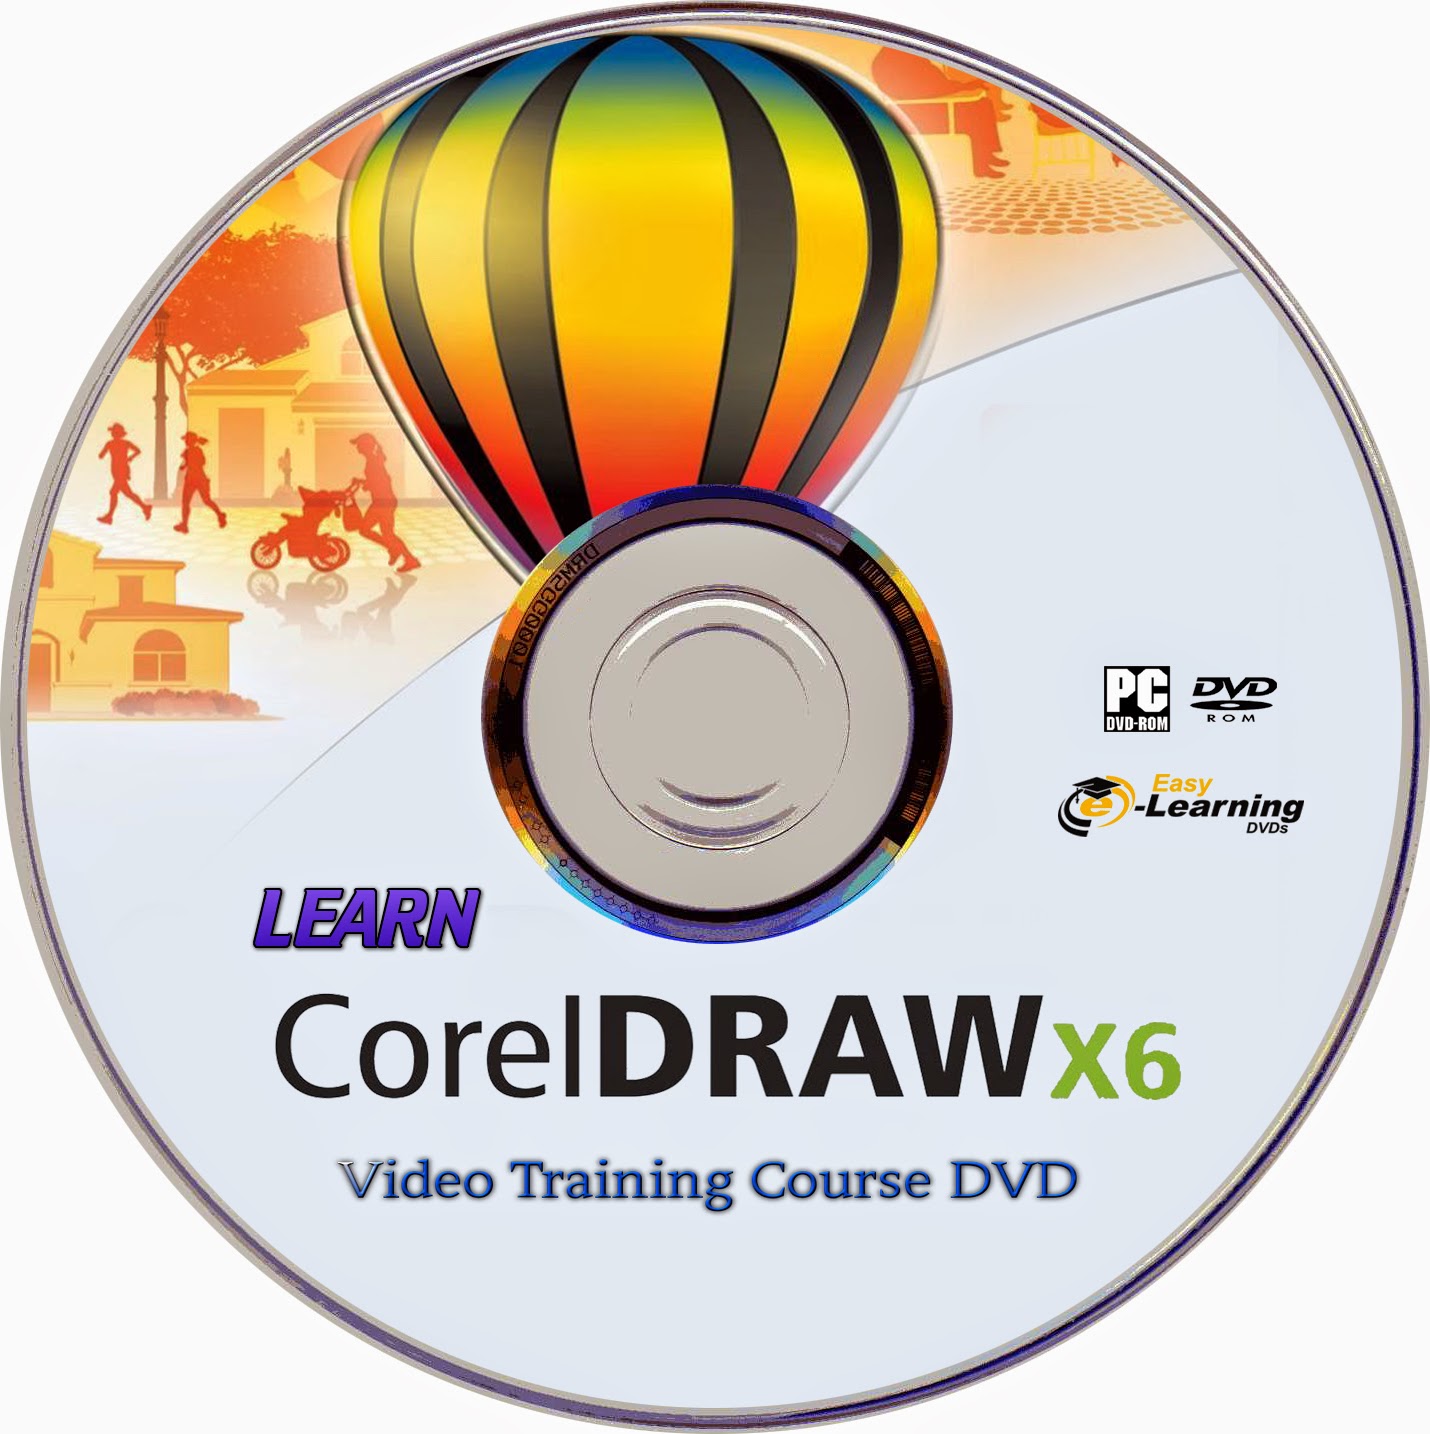 Tutorials DVD world: CorelDRAW X6 Video Training Tutorial DVD Rs 299/-